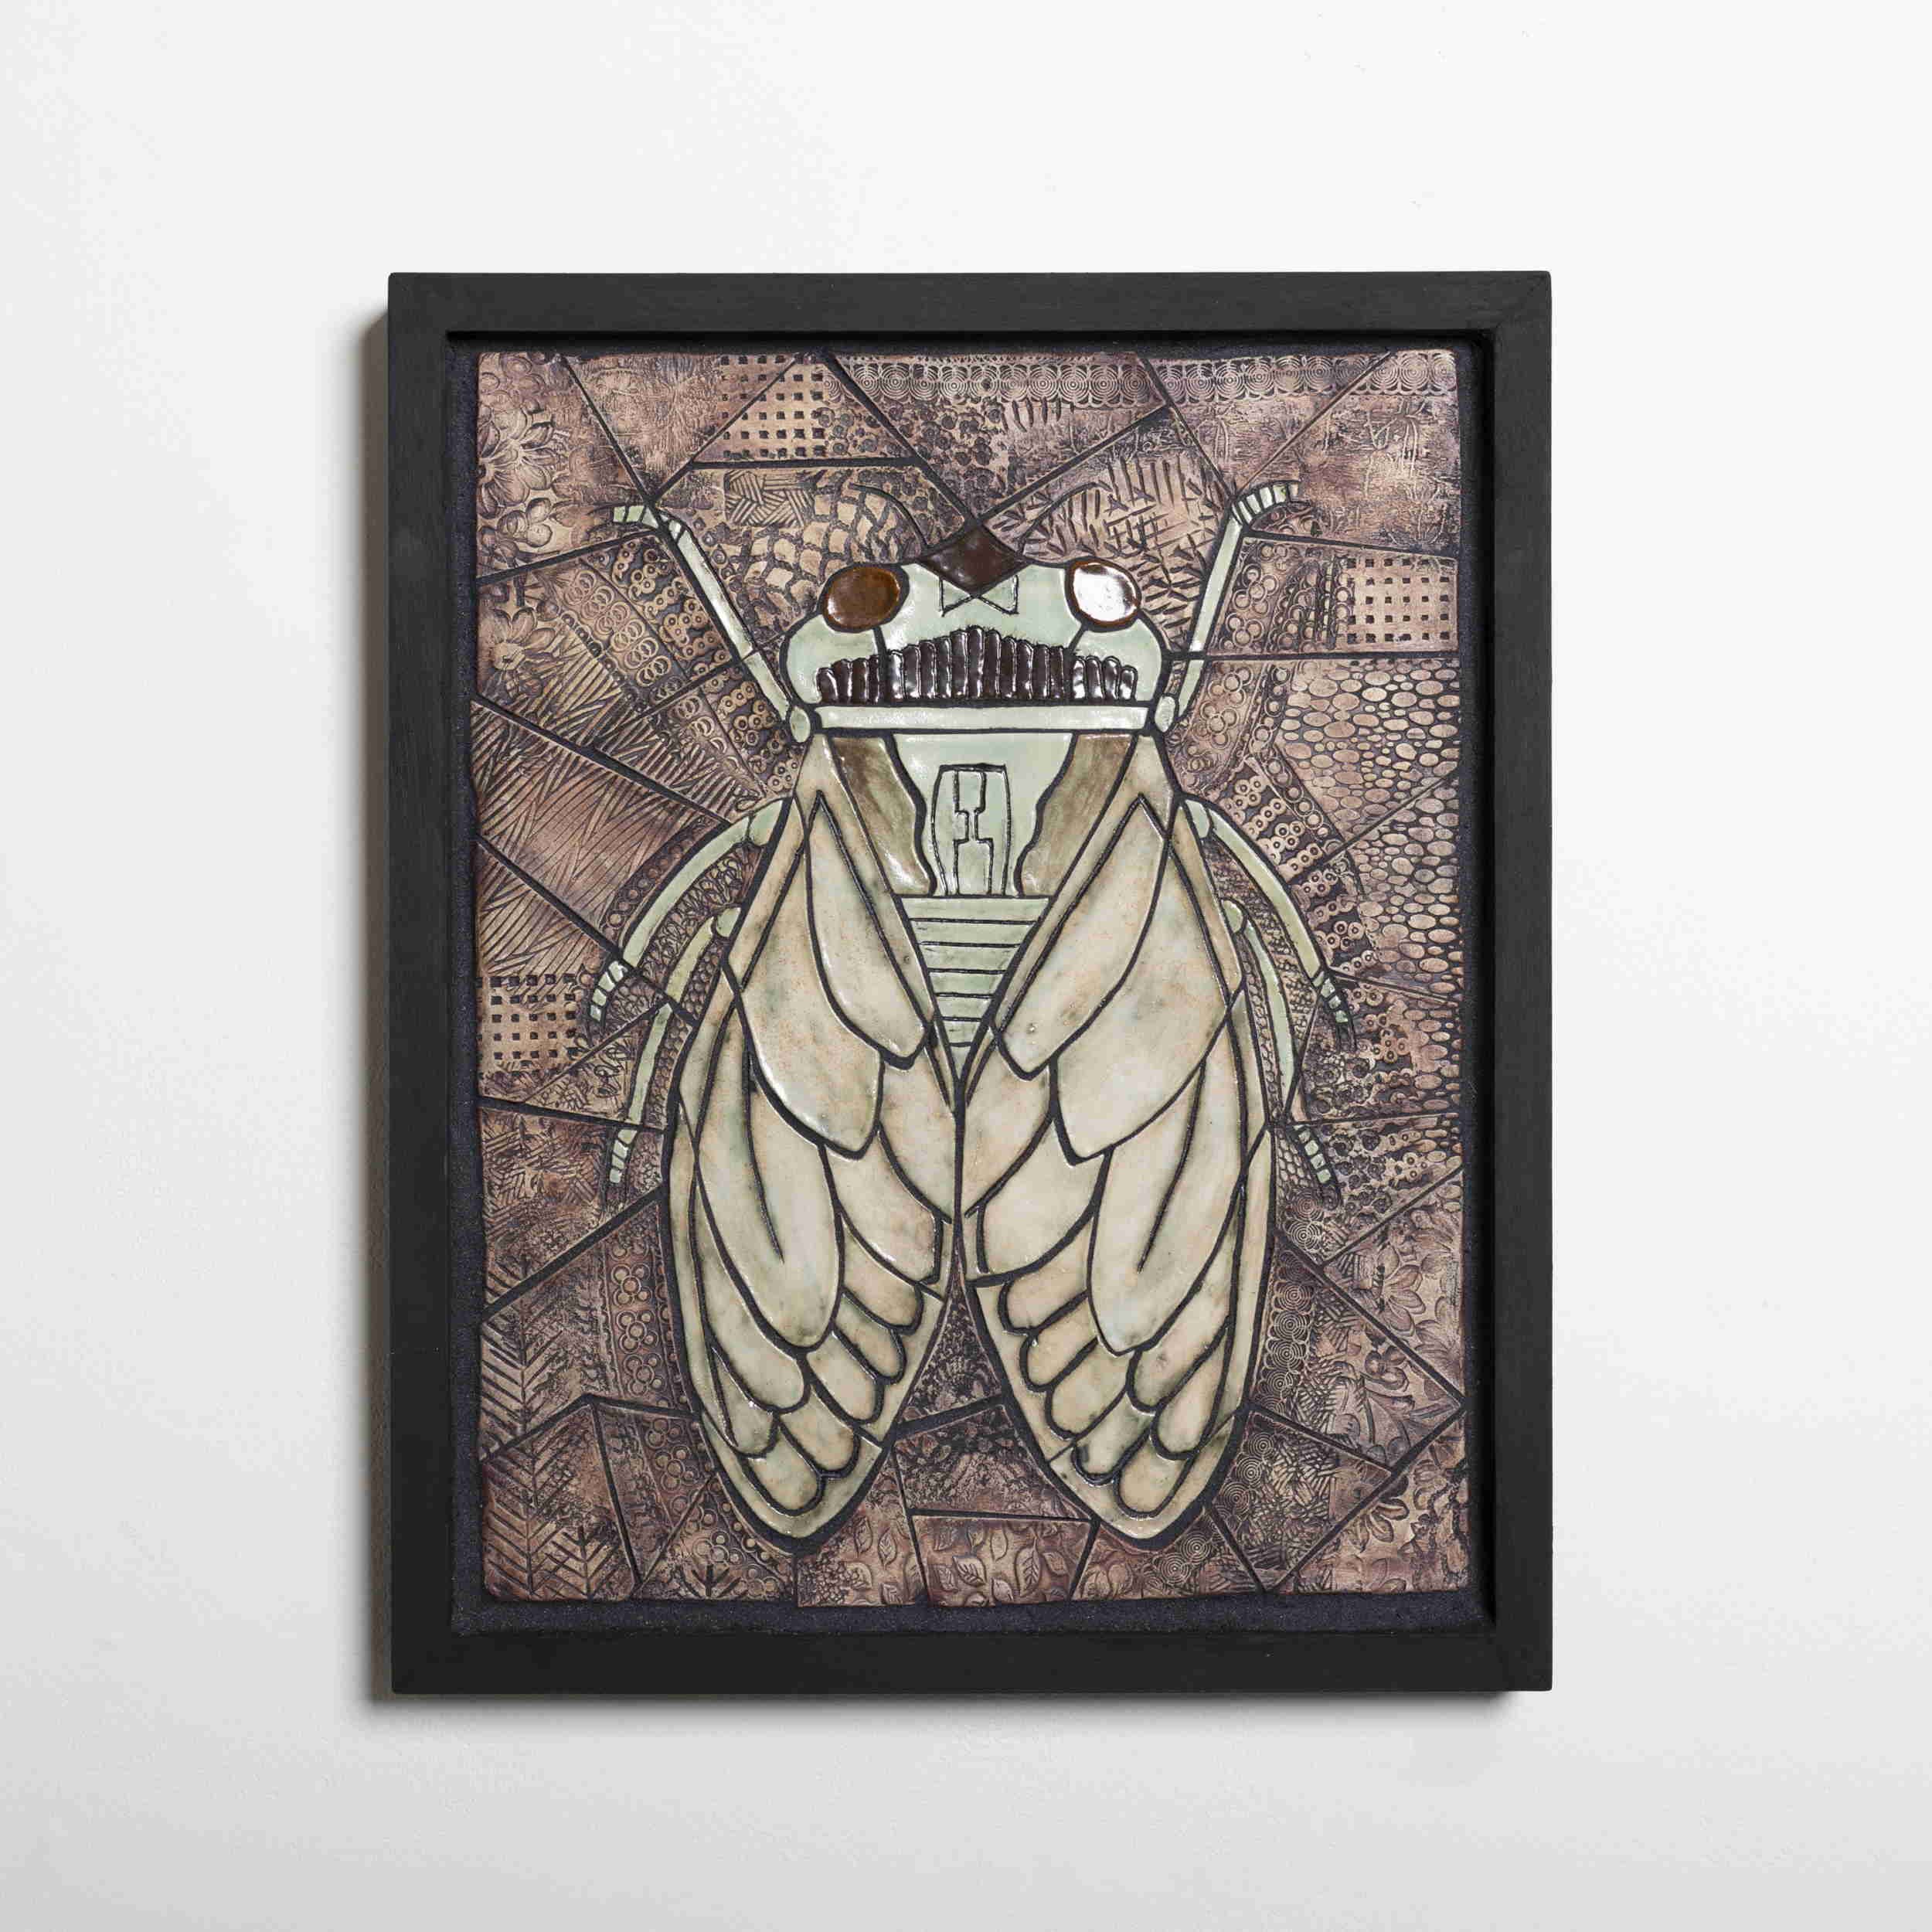  Jennifer Claydon   Plana Cicada   46.4 cm ht 